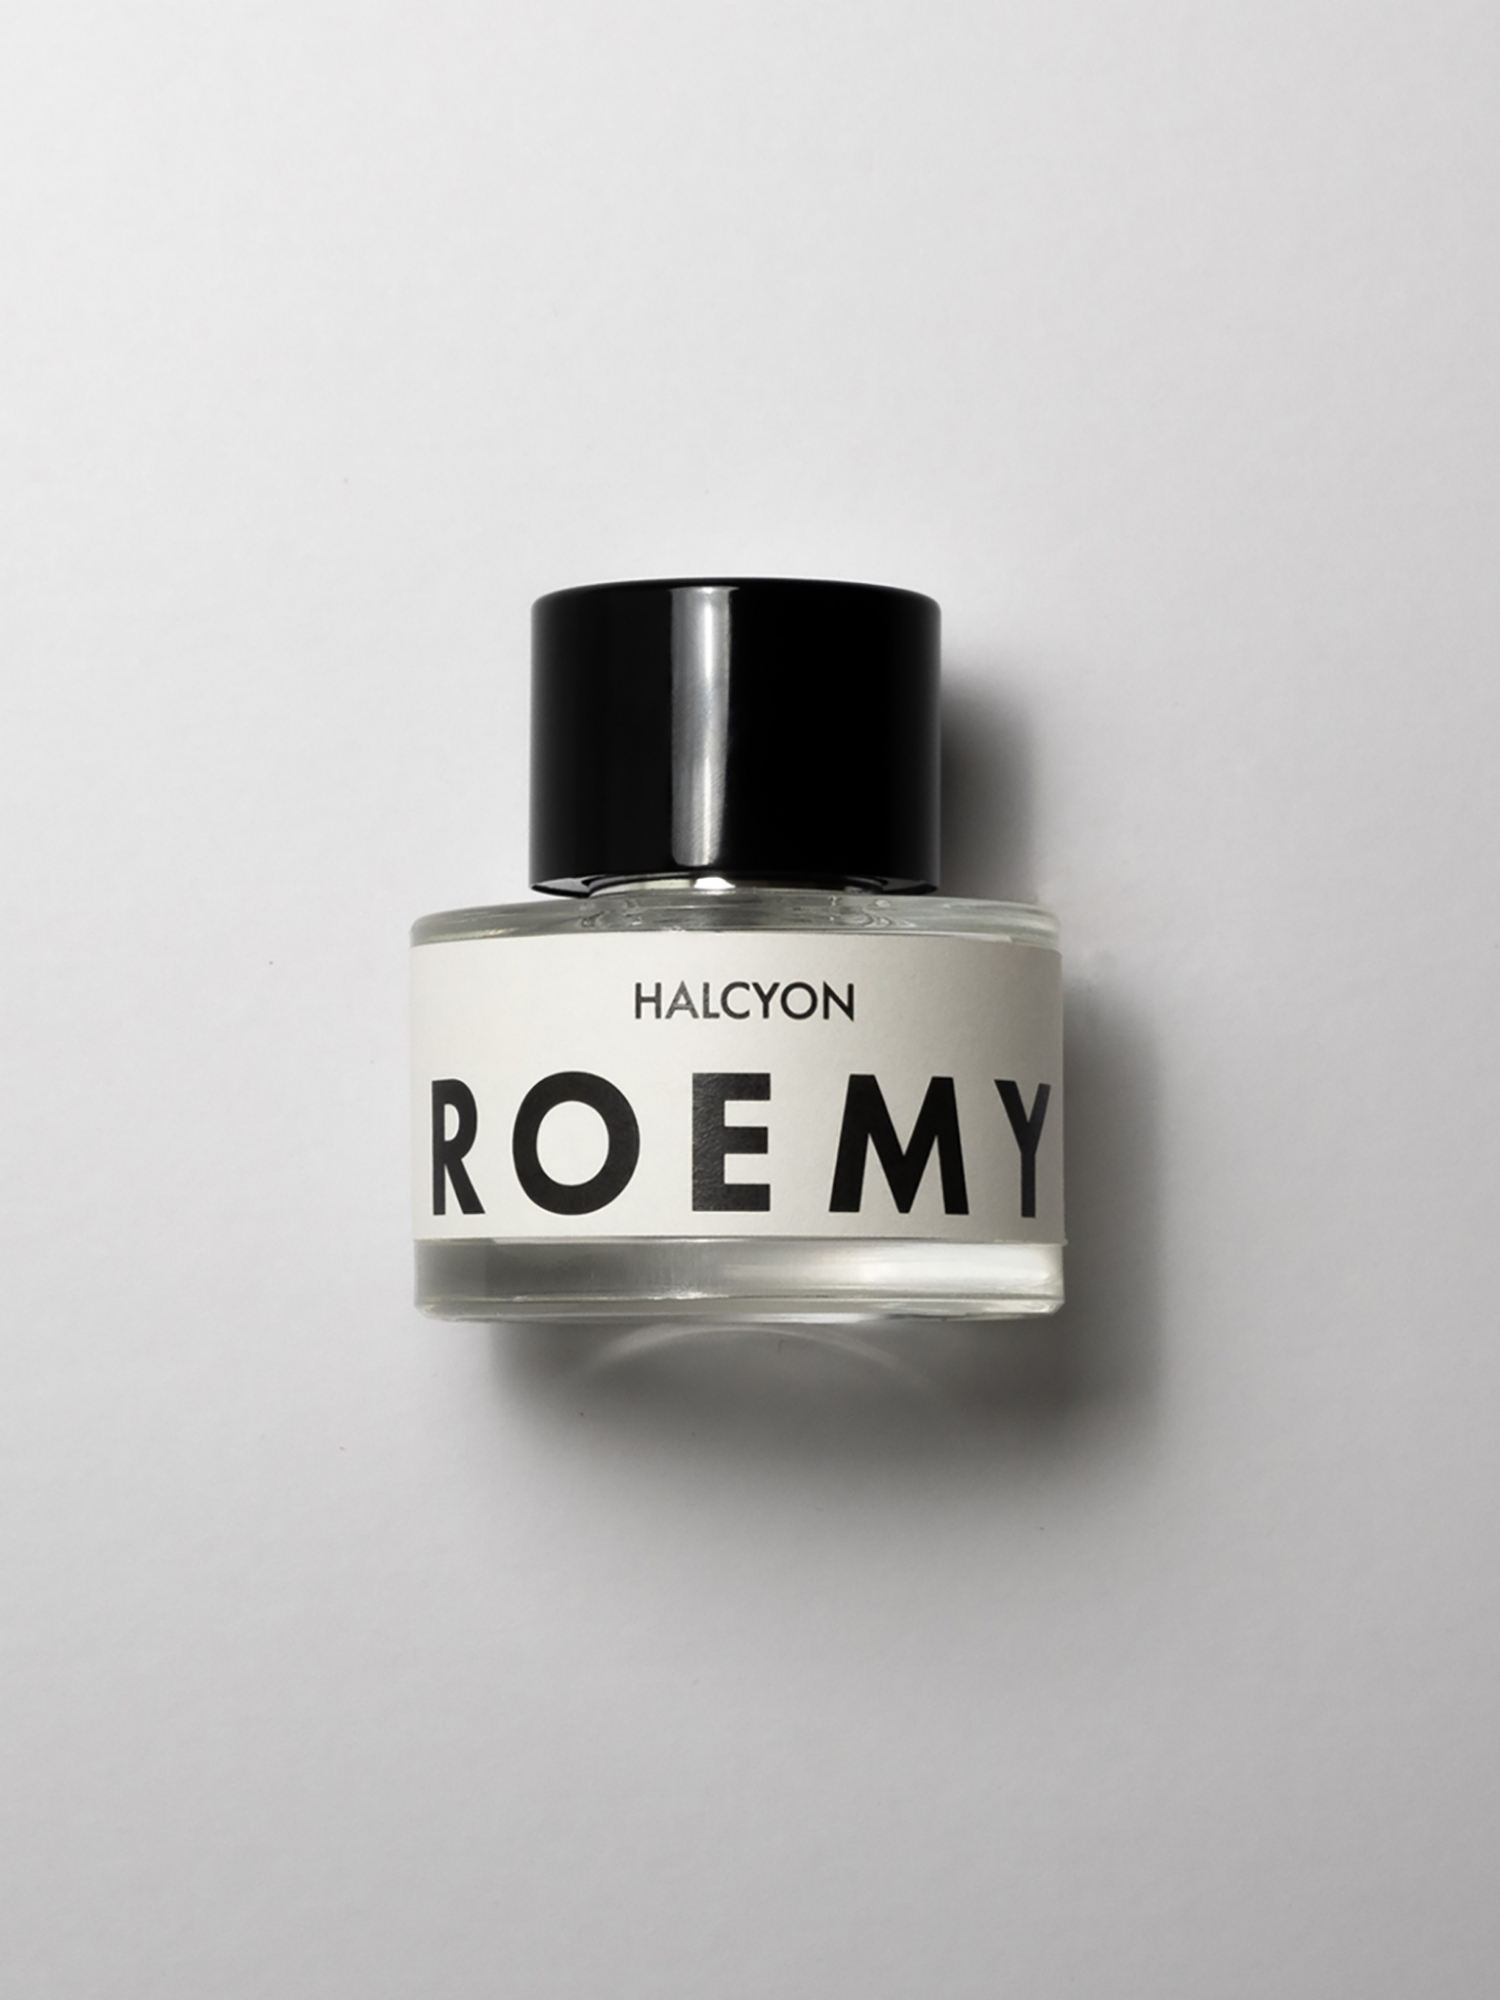 ROEMY - Halcyon